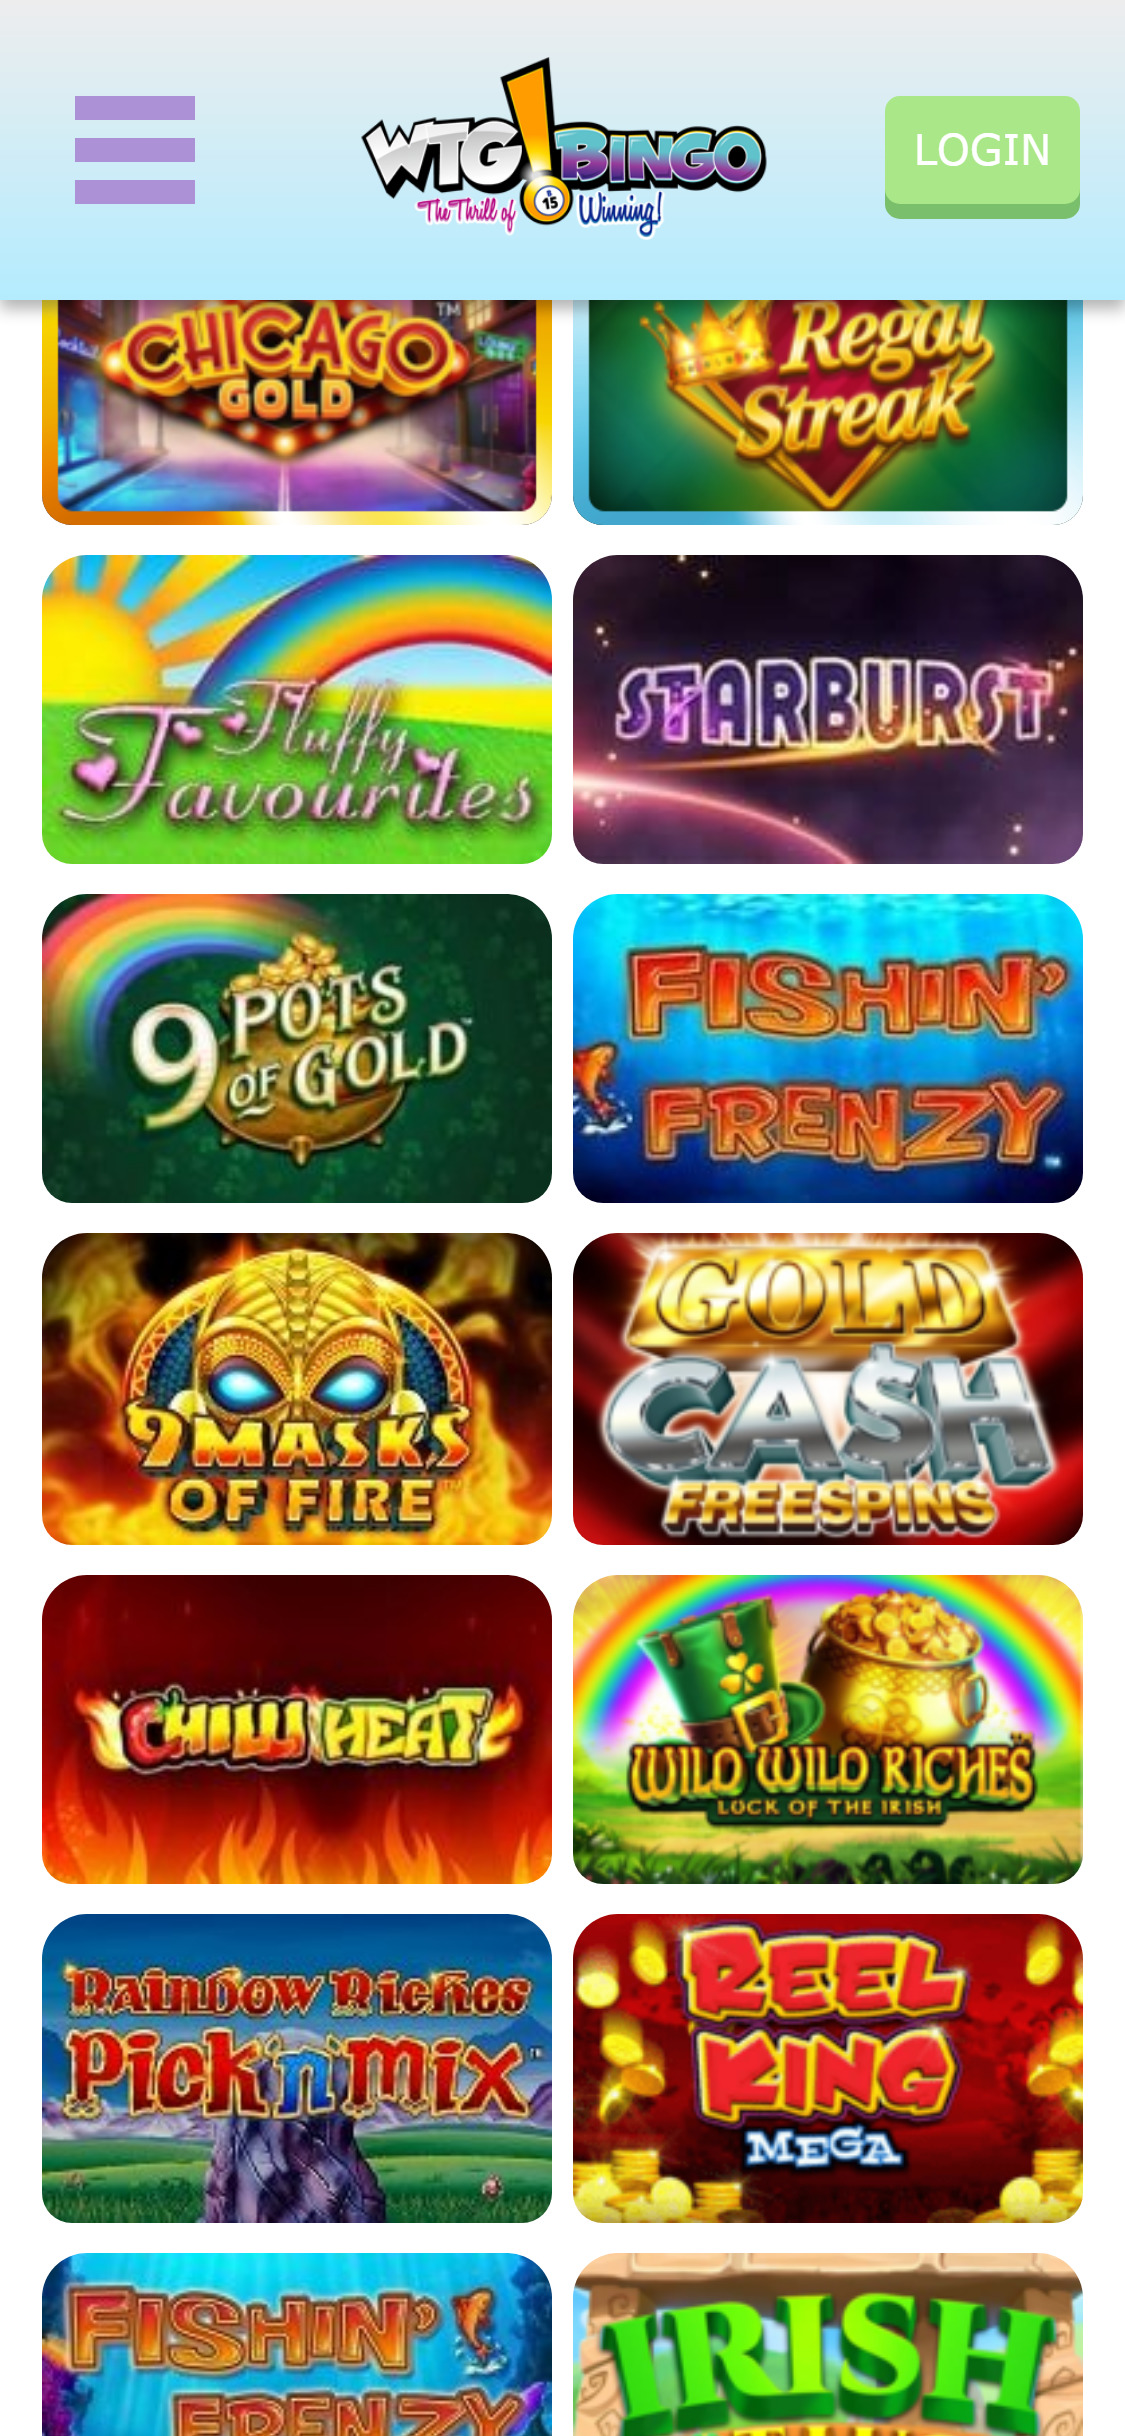 WTG Bingo Casino Mobile Games Review